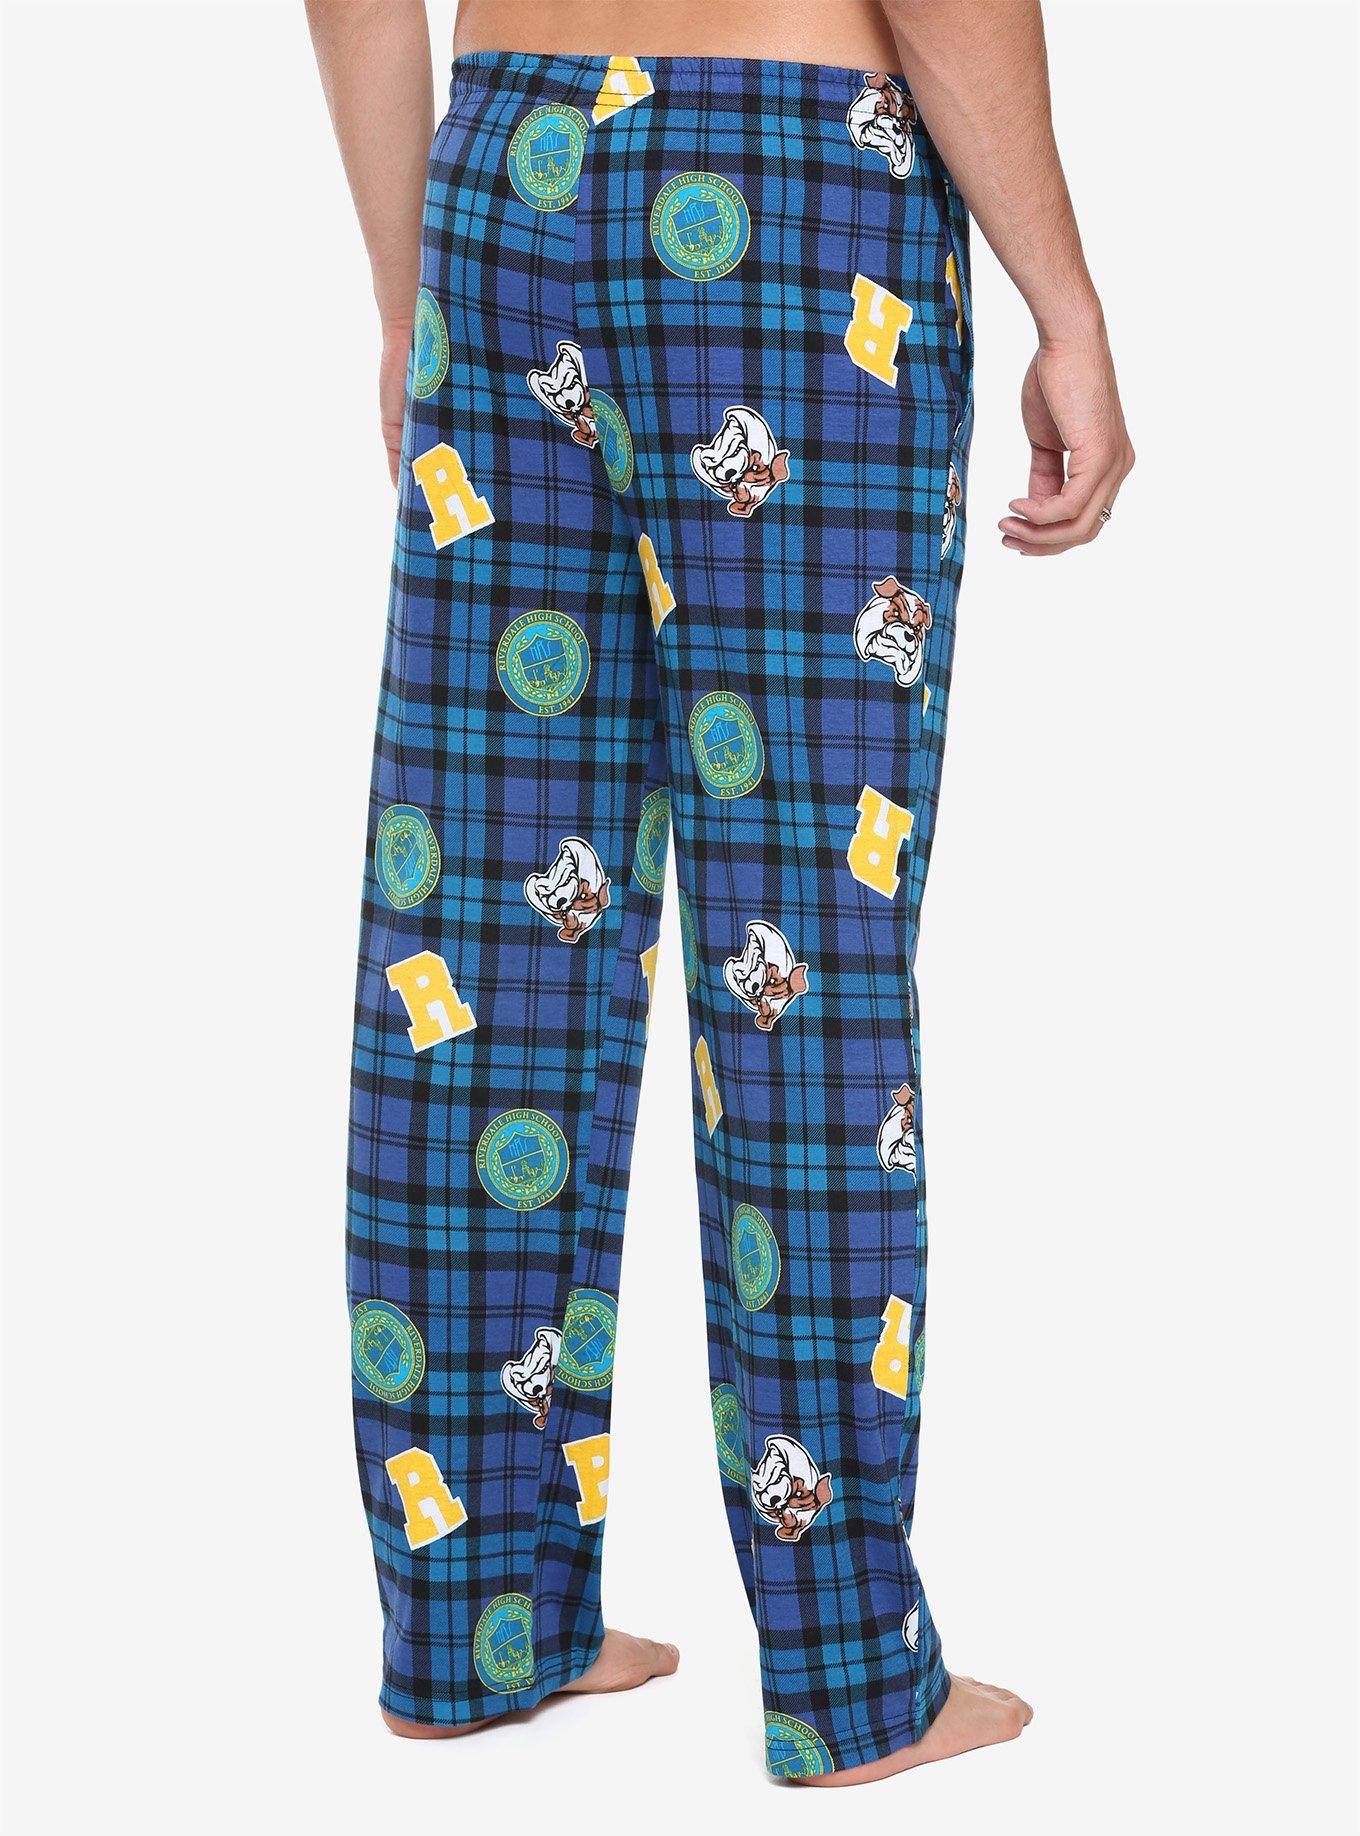 Riverdale High School Plaid Pajama Pants Hot Topic Exclusive, , alternate